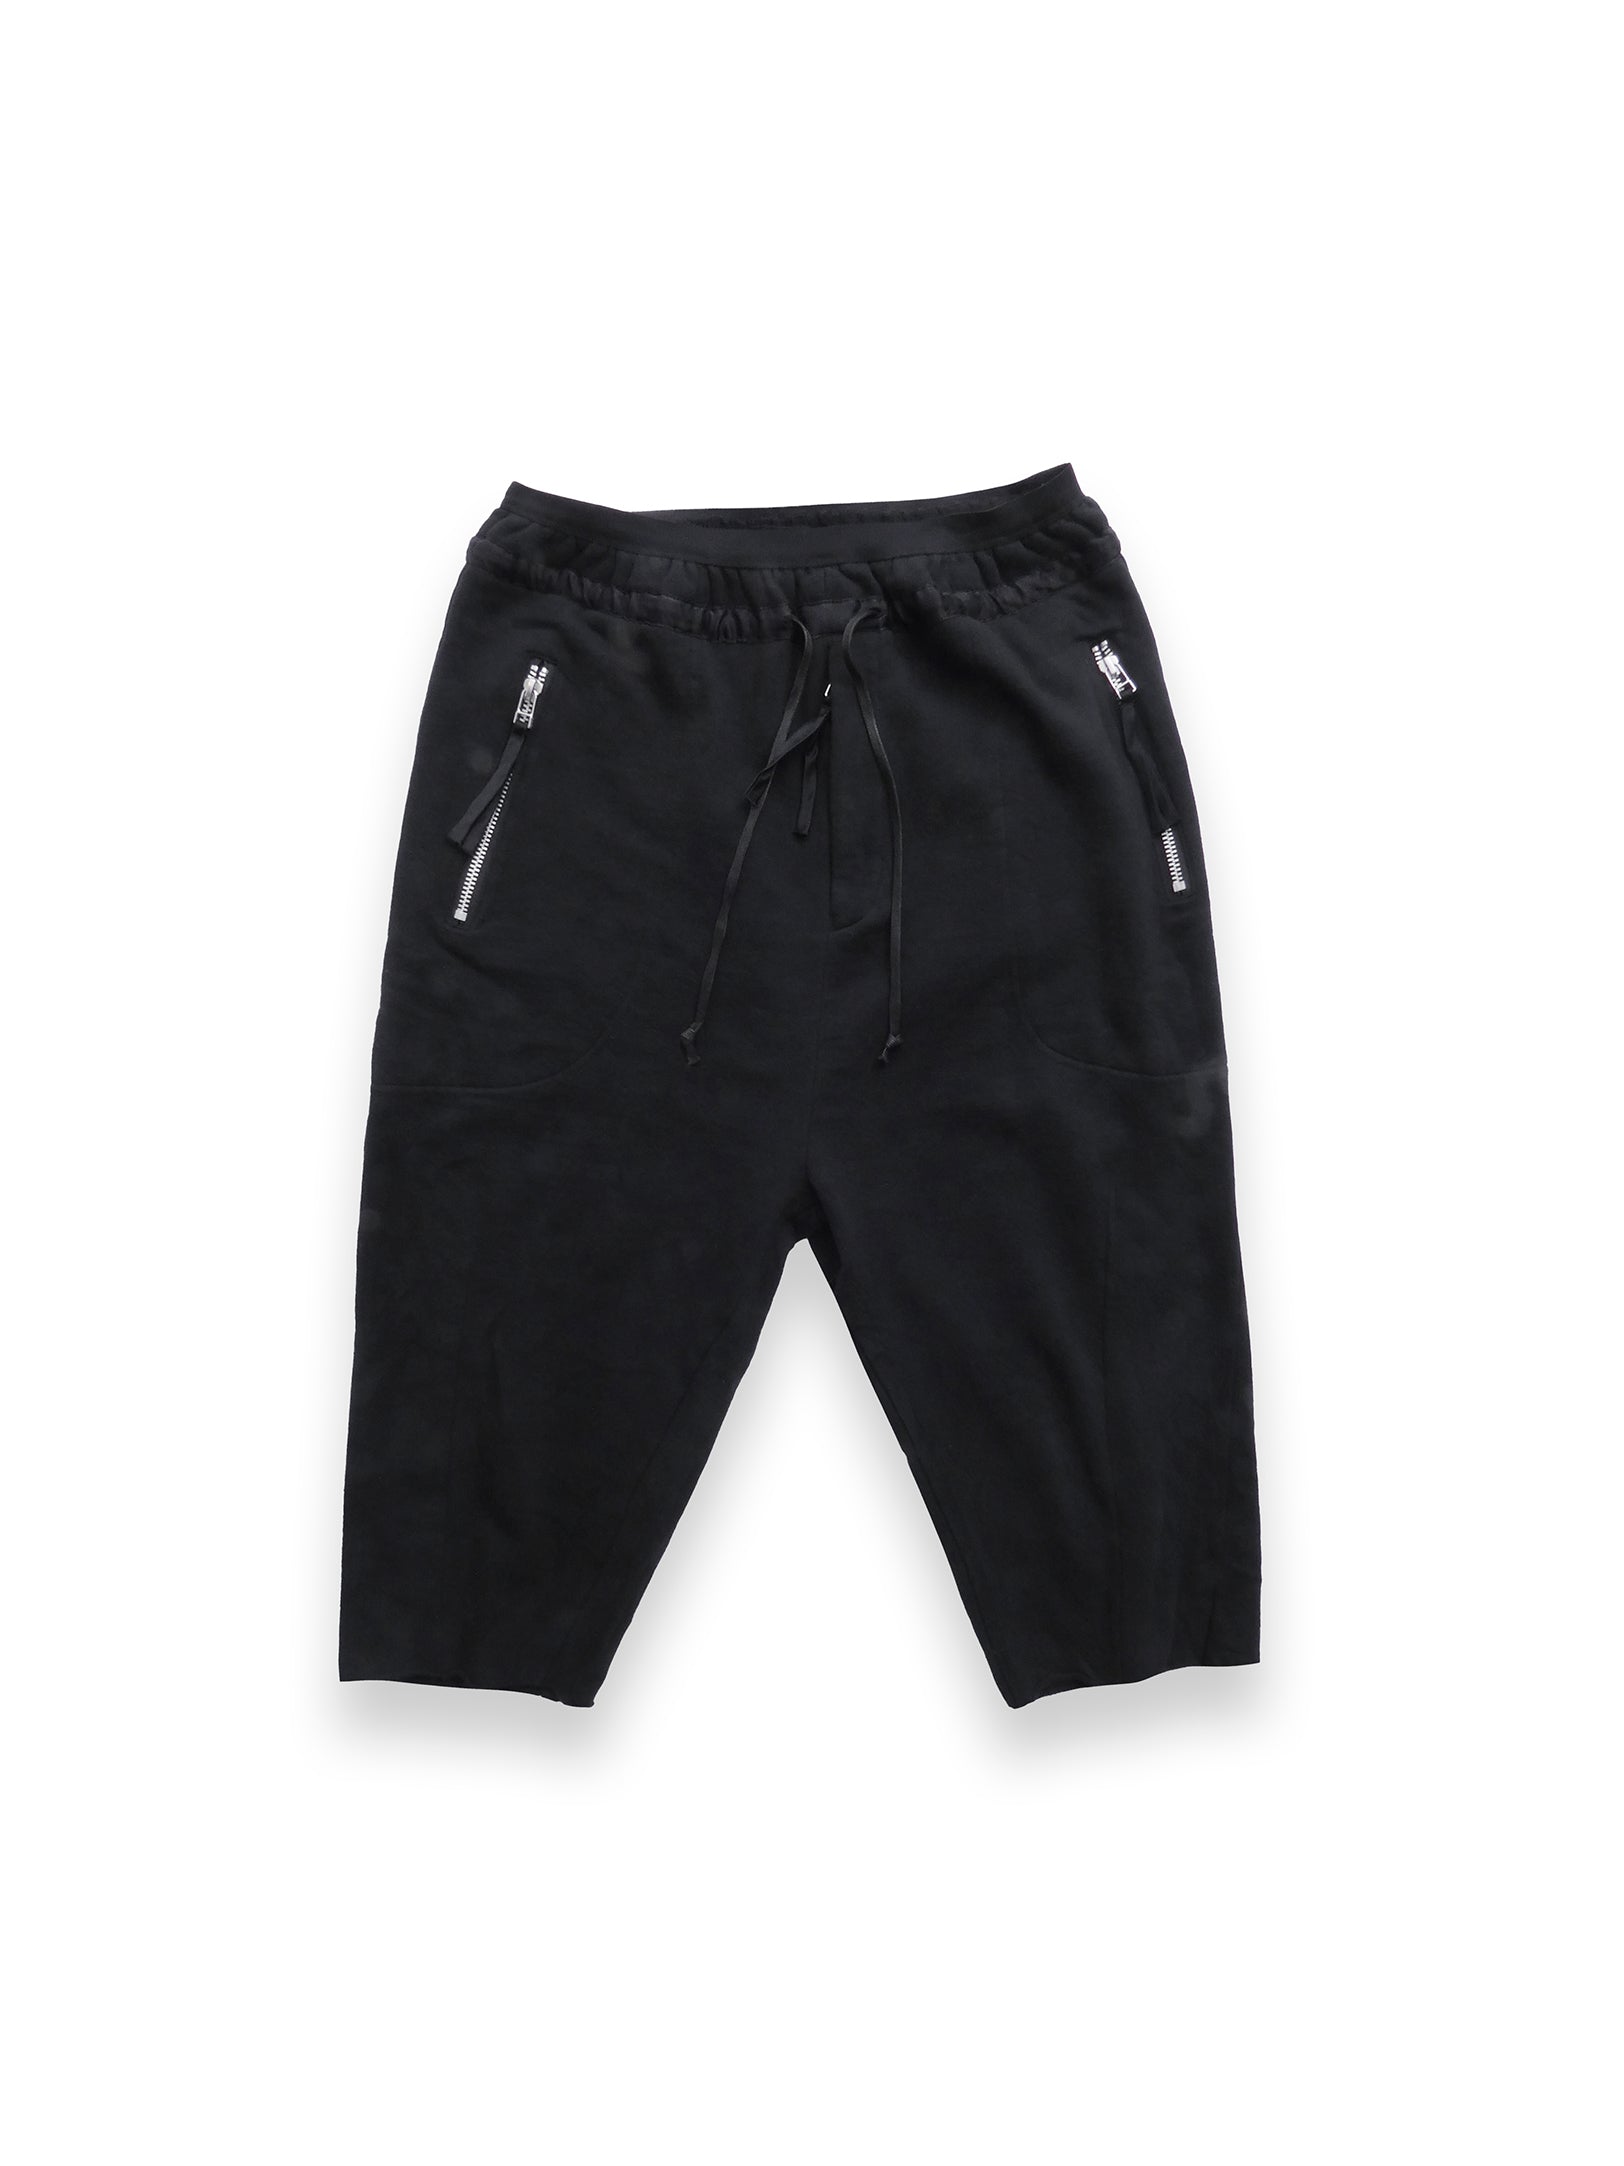 Black 3/4 Length Jogger Shorts